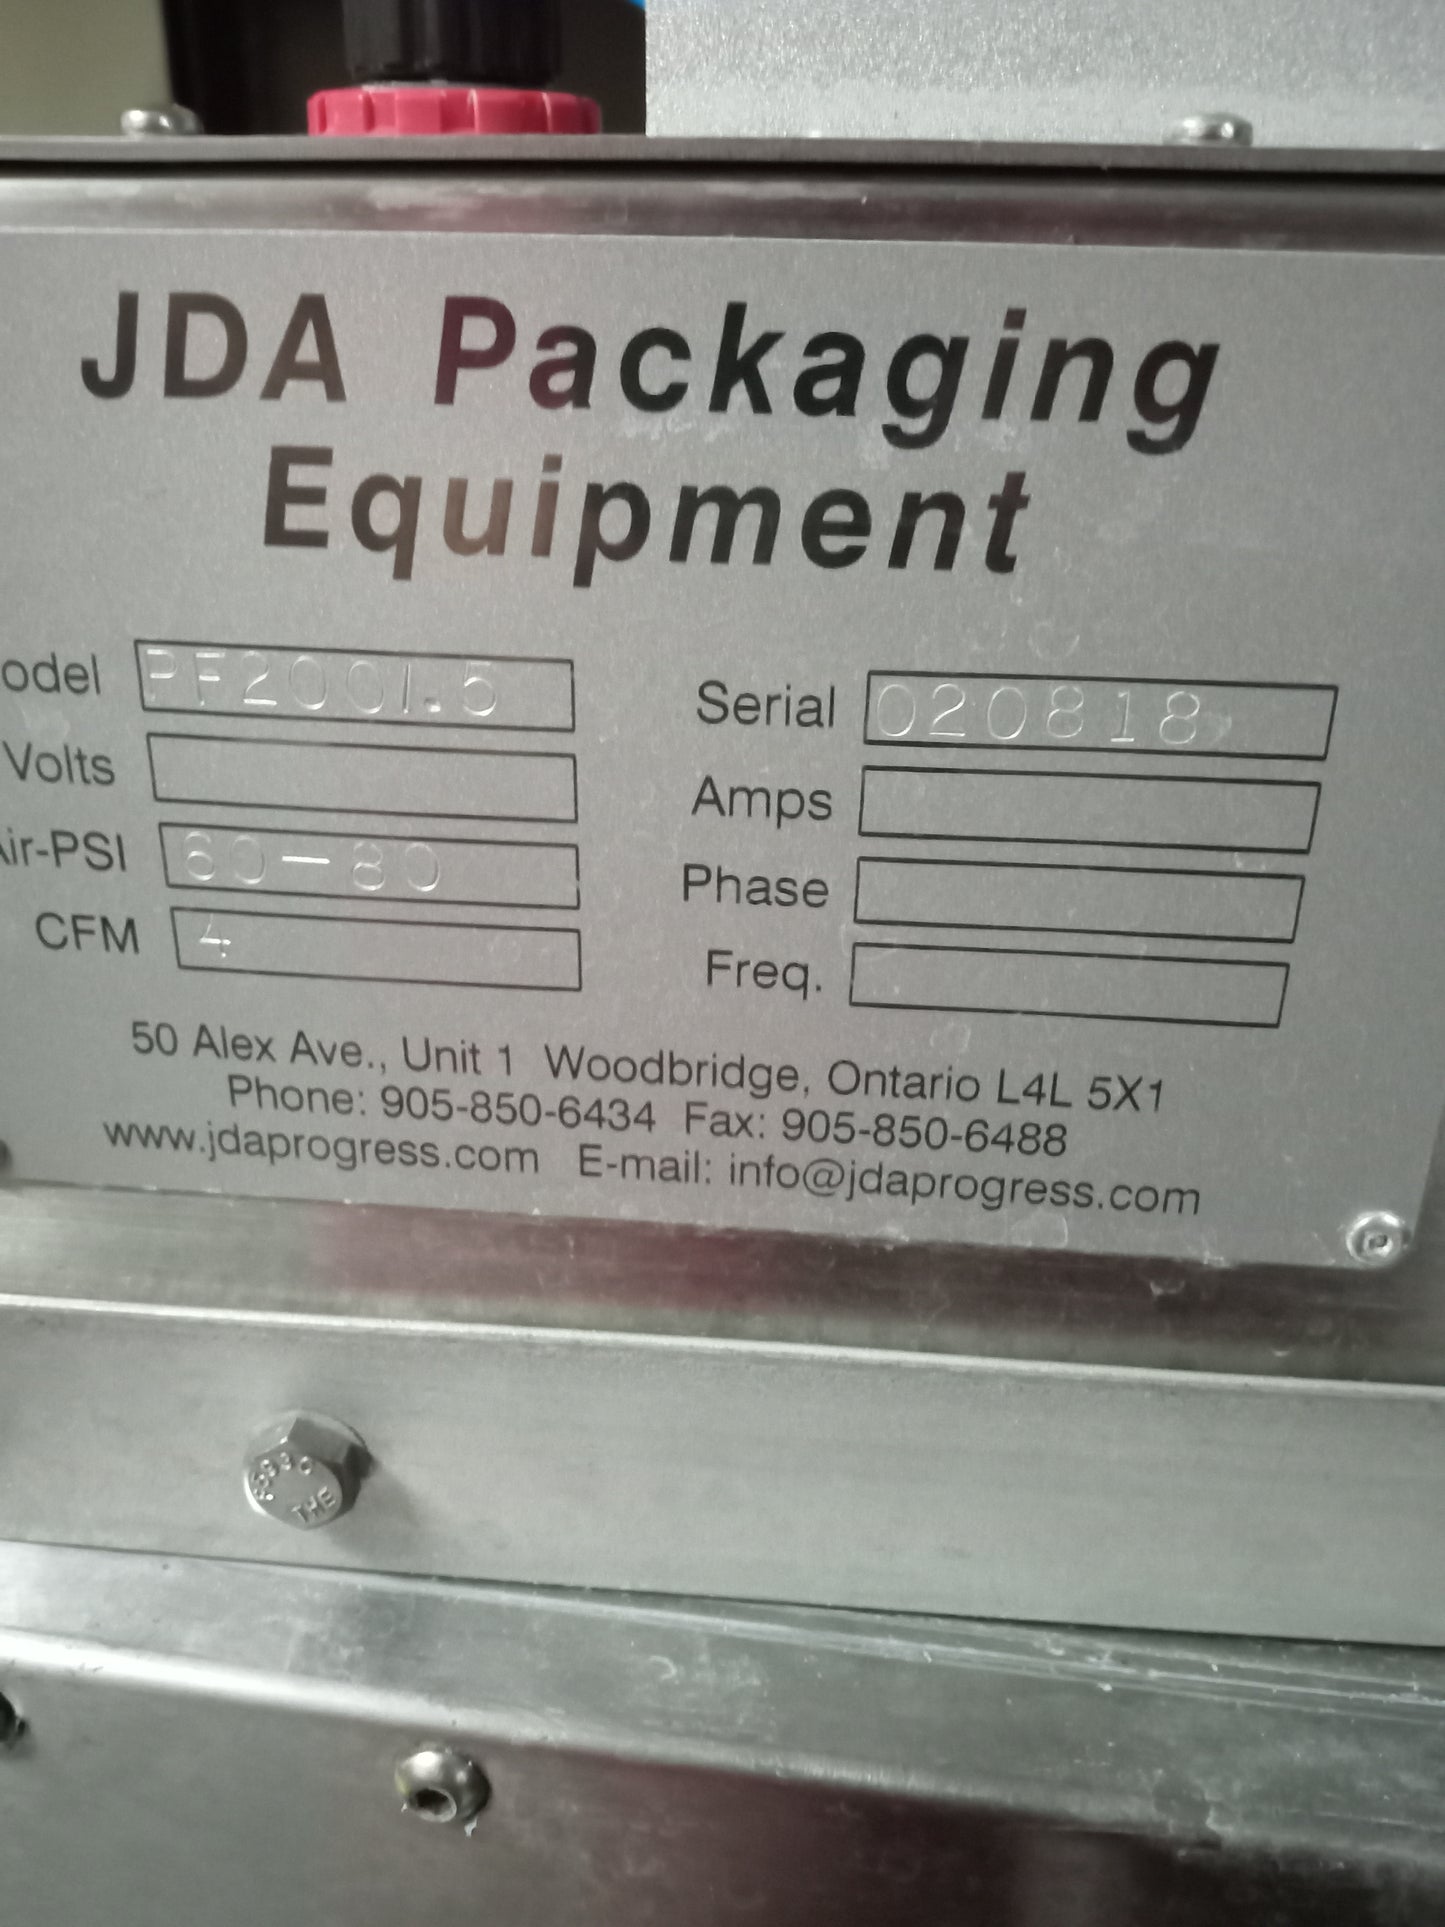 JDA Packaging Equipment Model PF200I.5